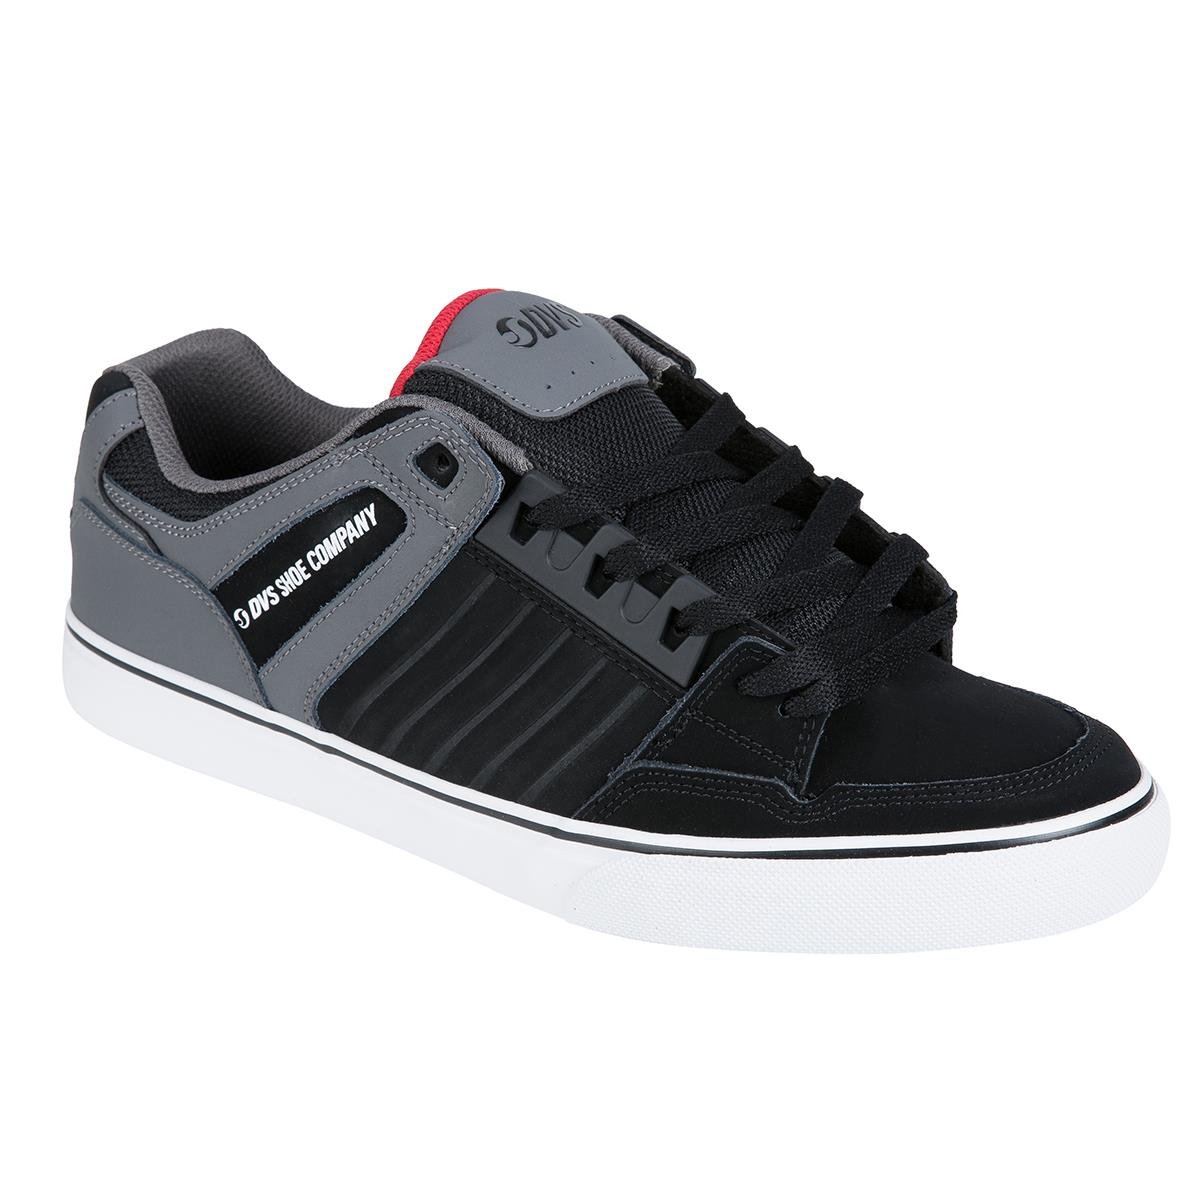 DVS Shoes Celsius CT Black/Charcoal/Red Nubuk